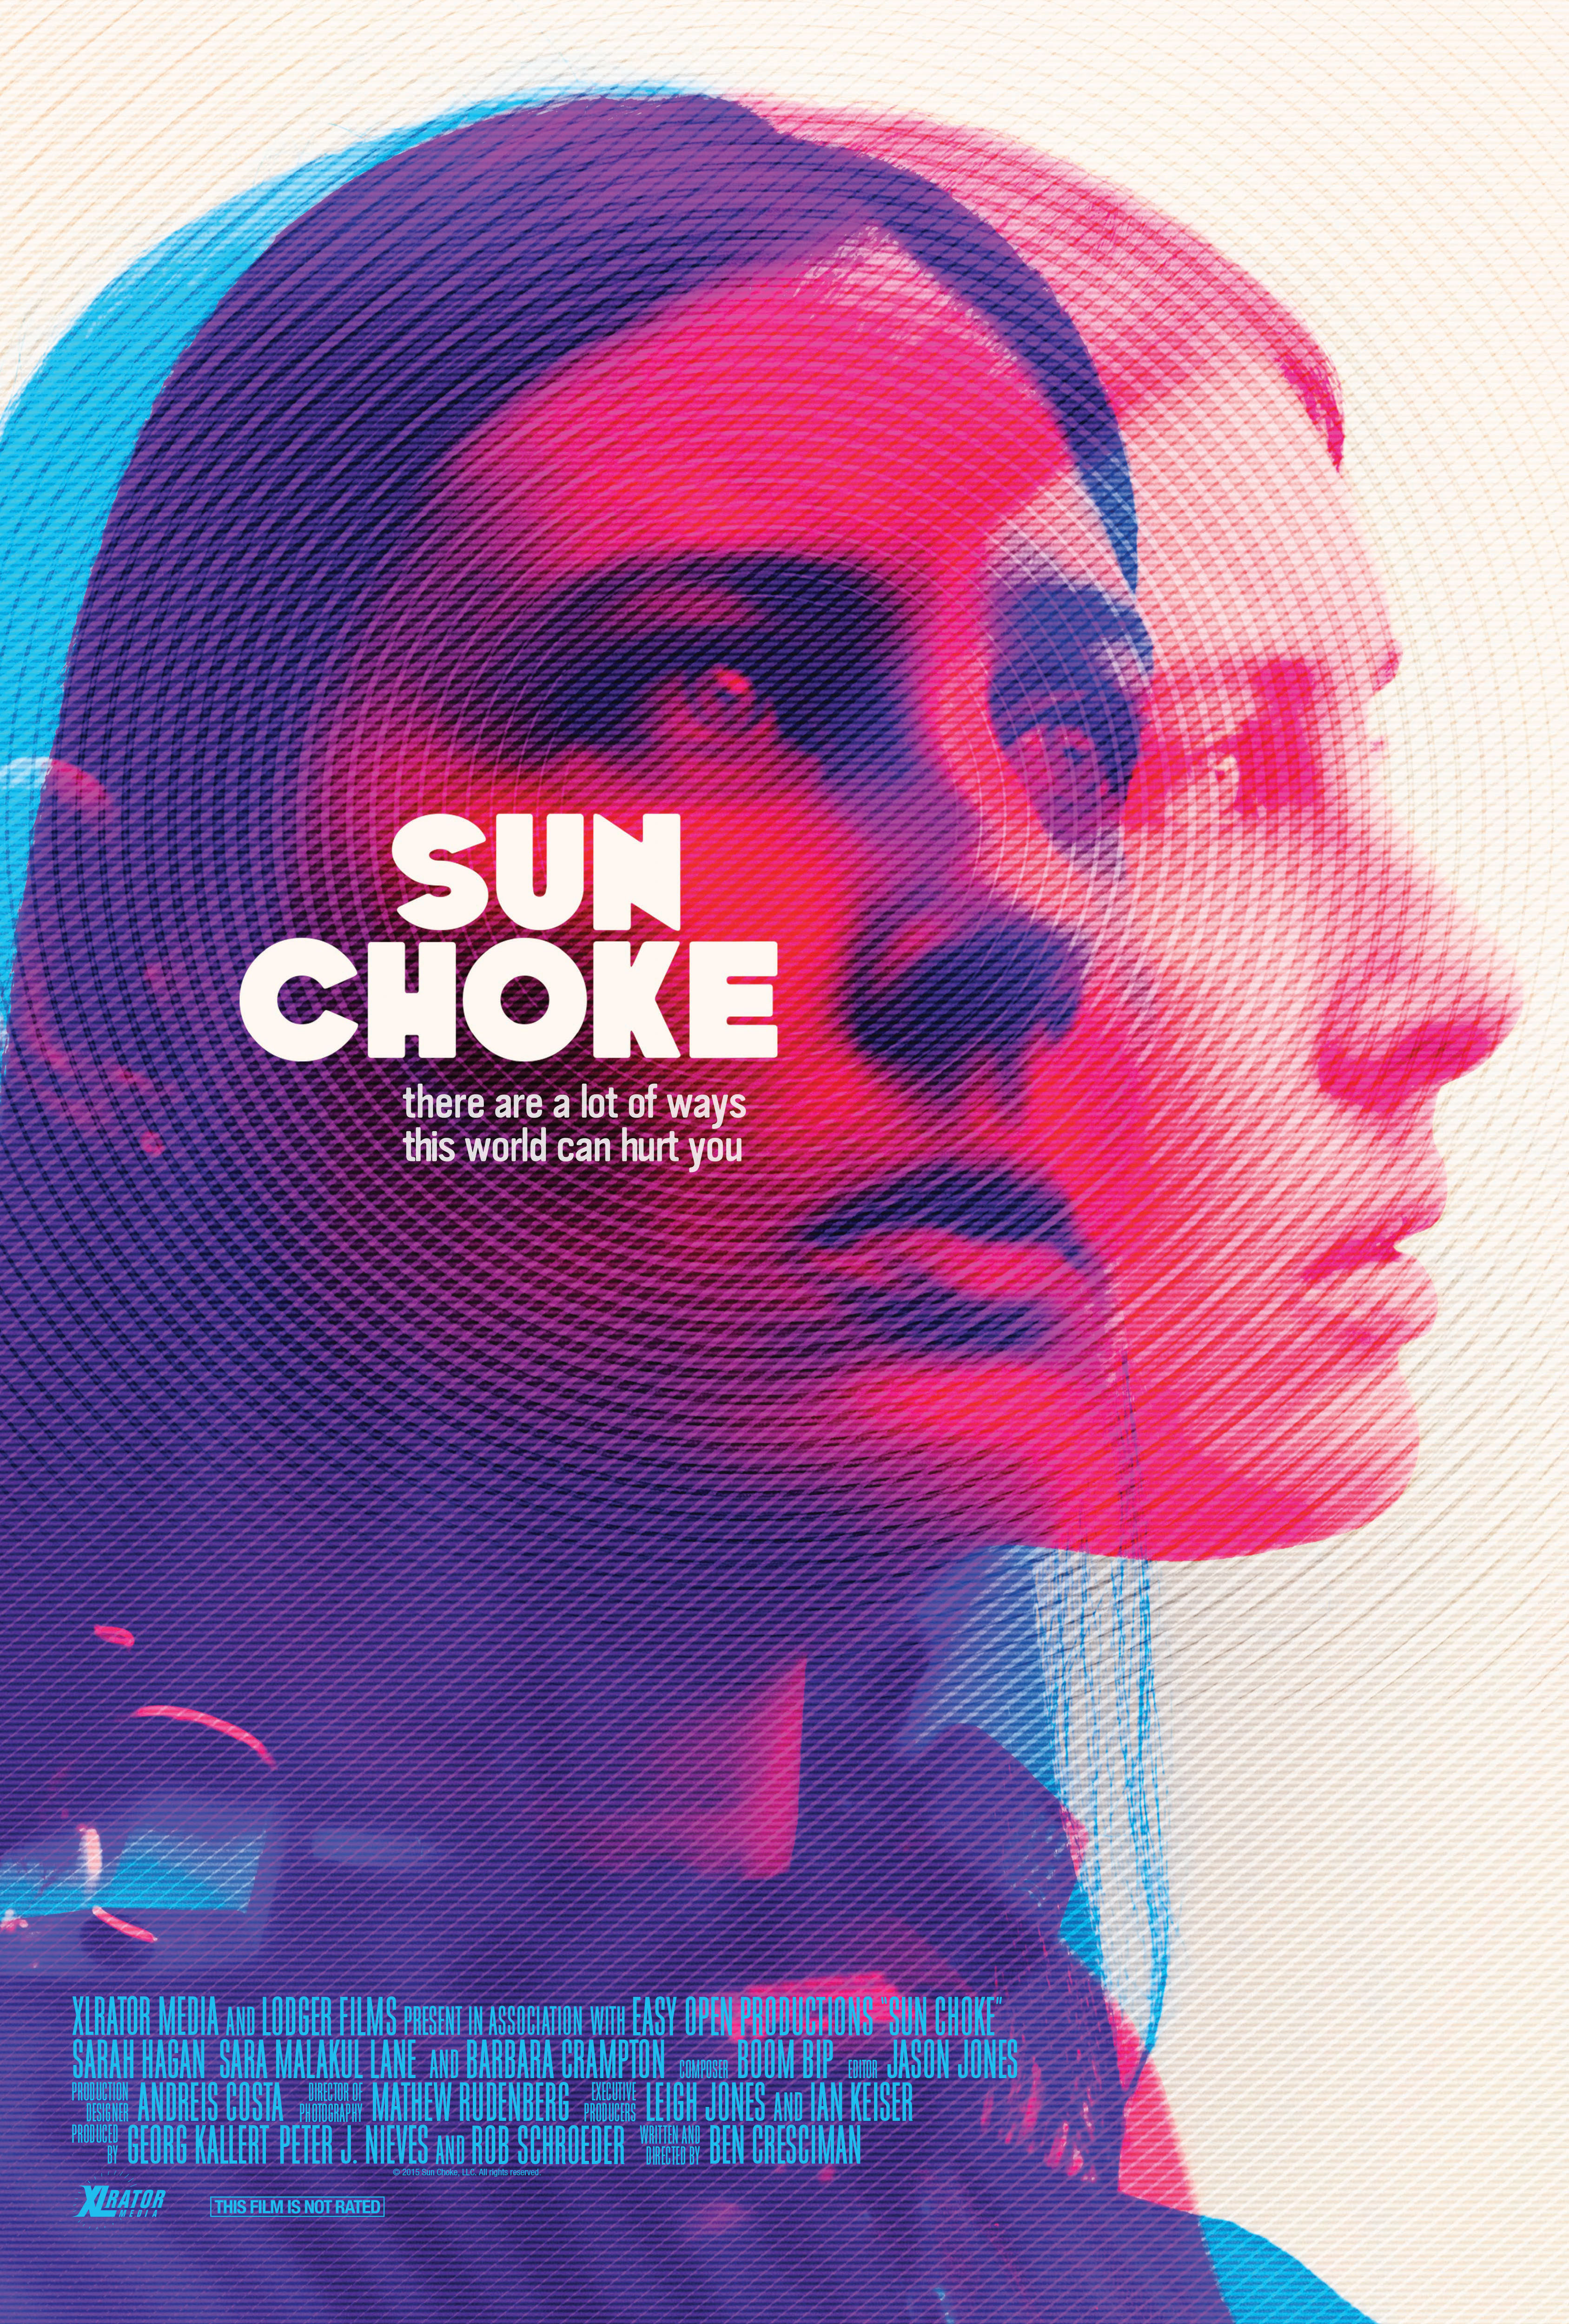 Nonton film Sun Choke layarkaca21 indoxx1 ganool online streaming terbaru